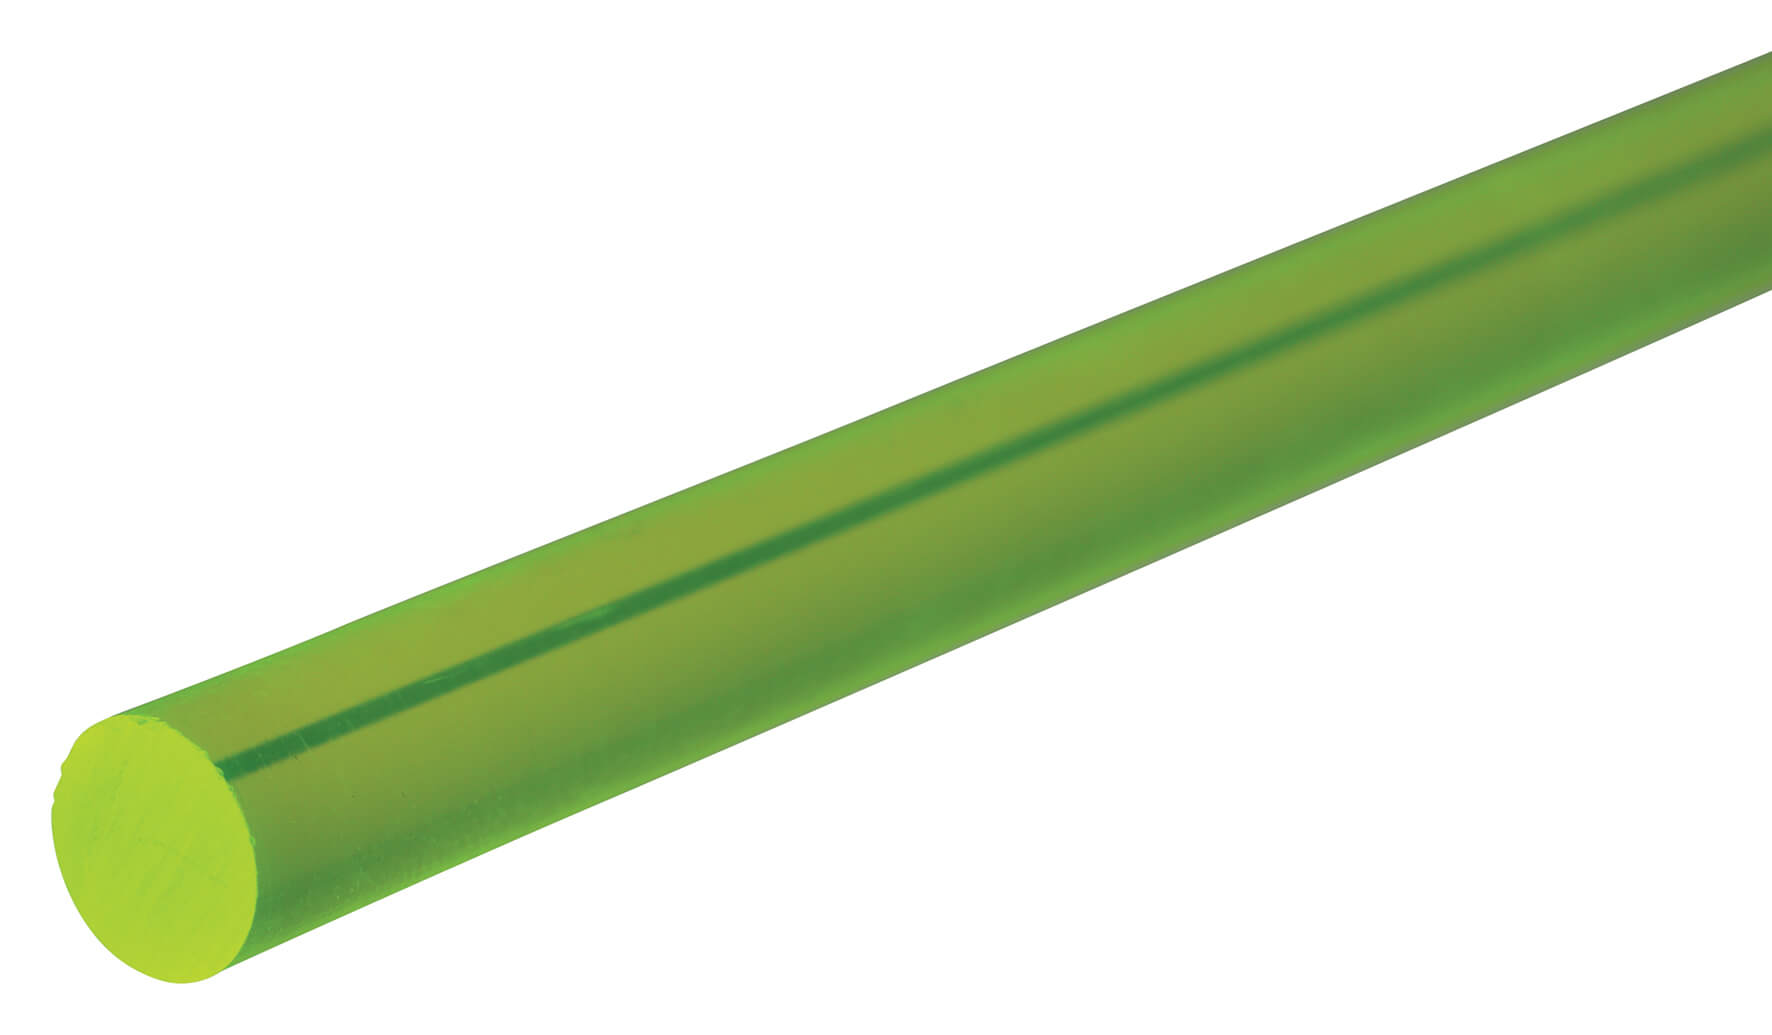 Fluorescent Acrylic Rod 10mm x 500mm - Green